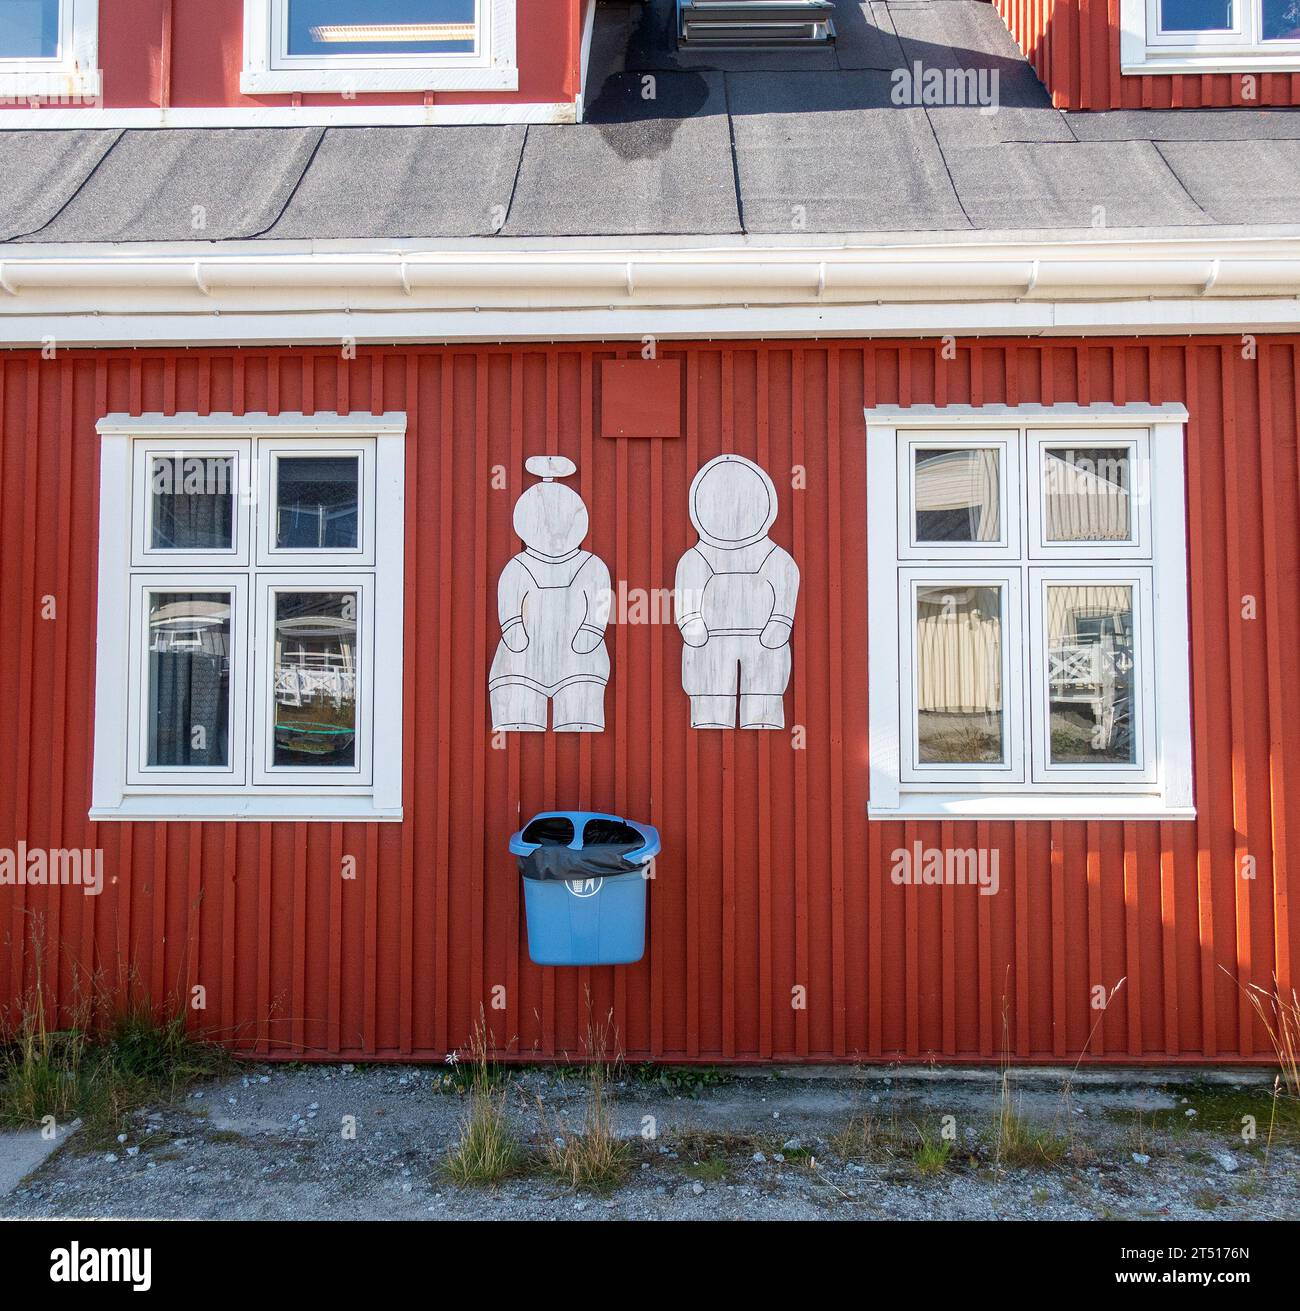 Inuusuttut Inaat A Government Run Childrens Home In Qaqortoq Greenland, Building Exterior With Inuit Children Folk Art Sign Stock Photo